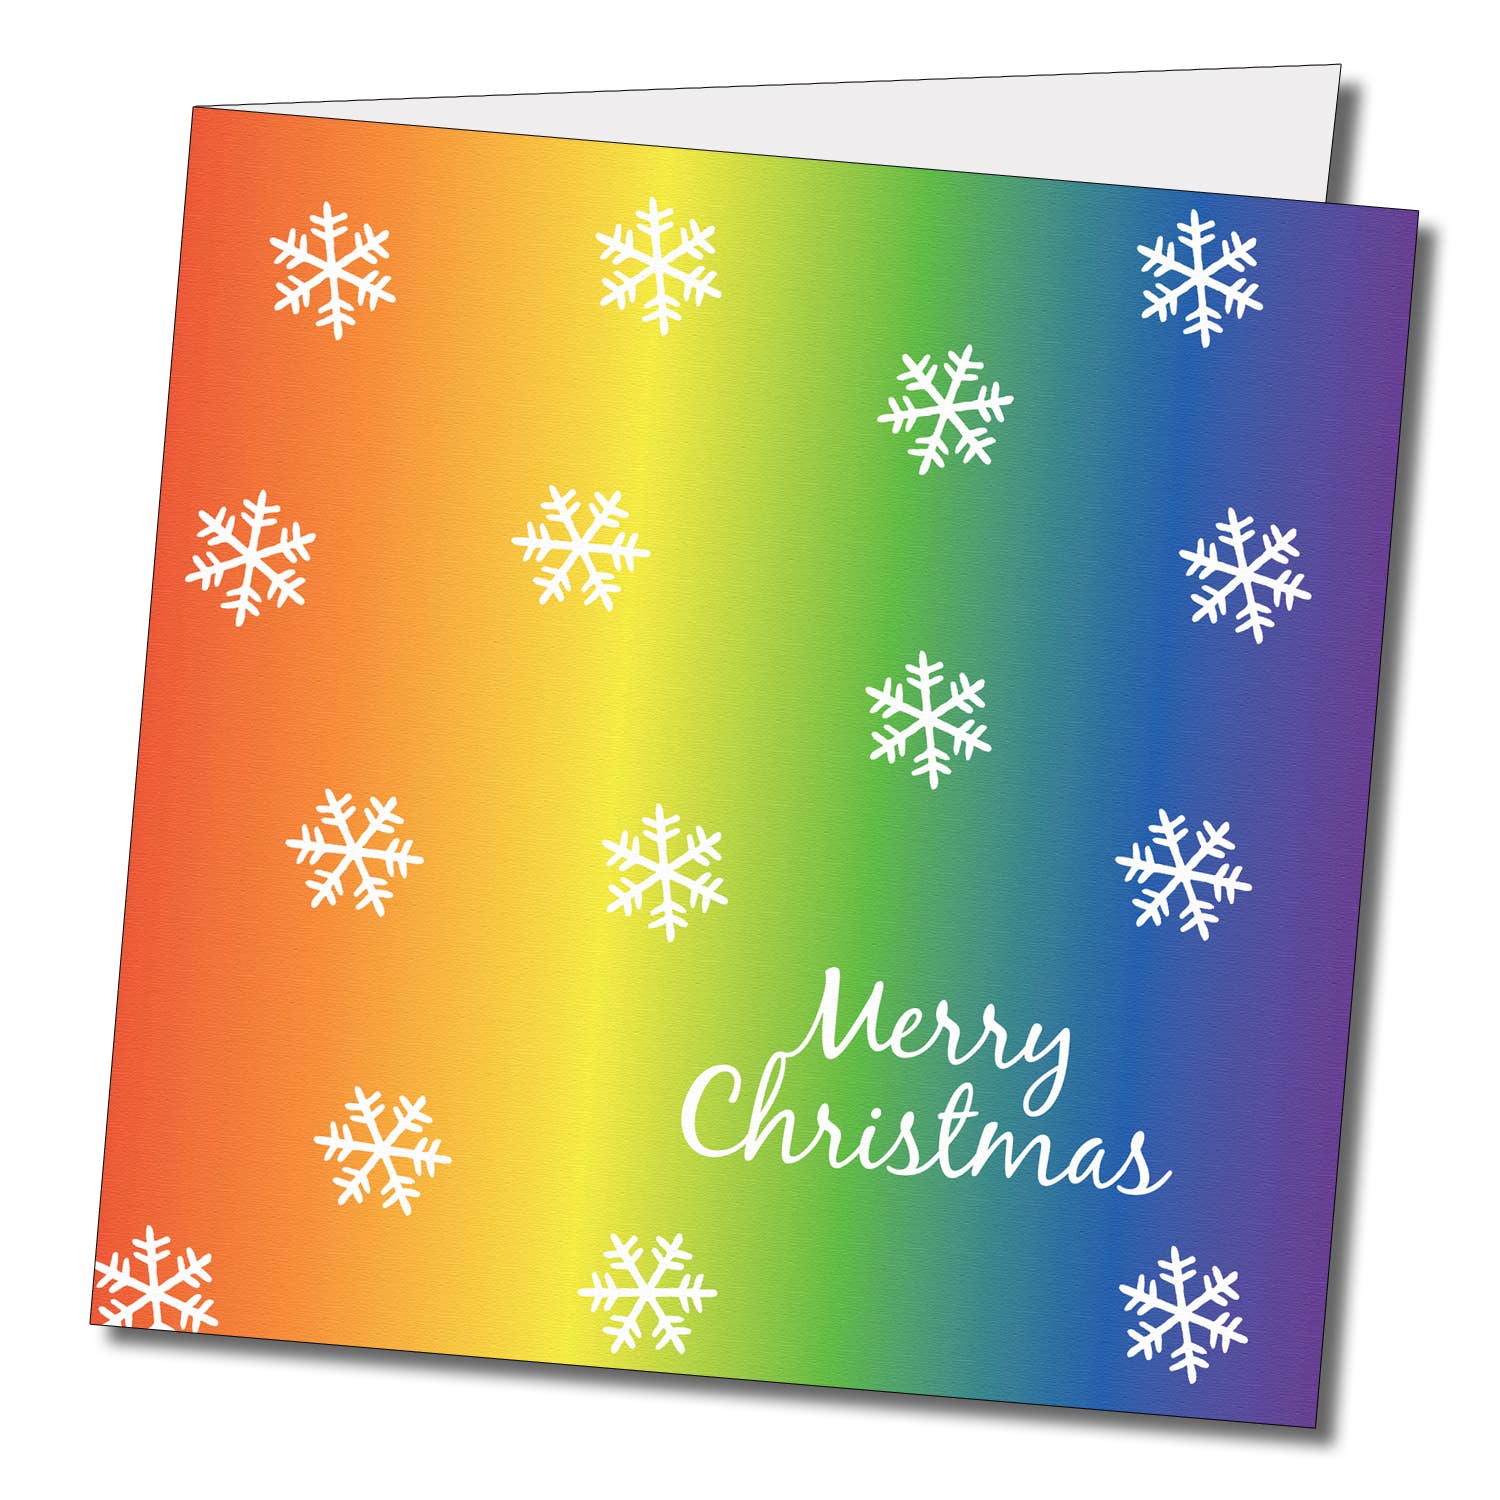 Merry Christmas Lgbtq+ Greeting card